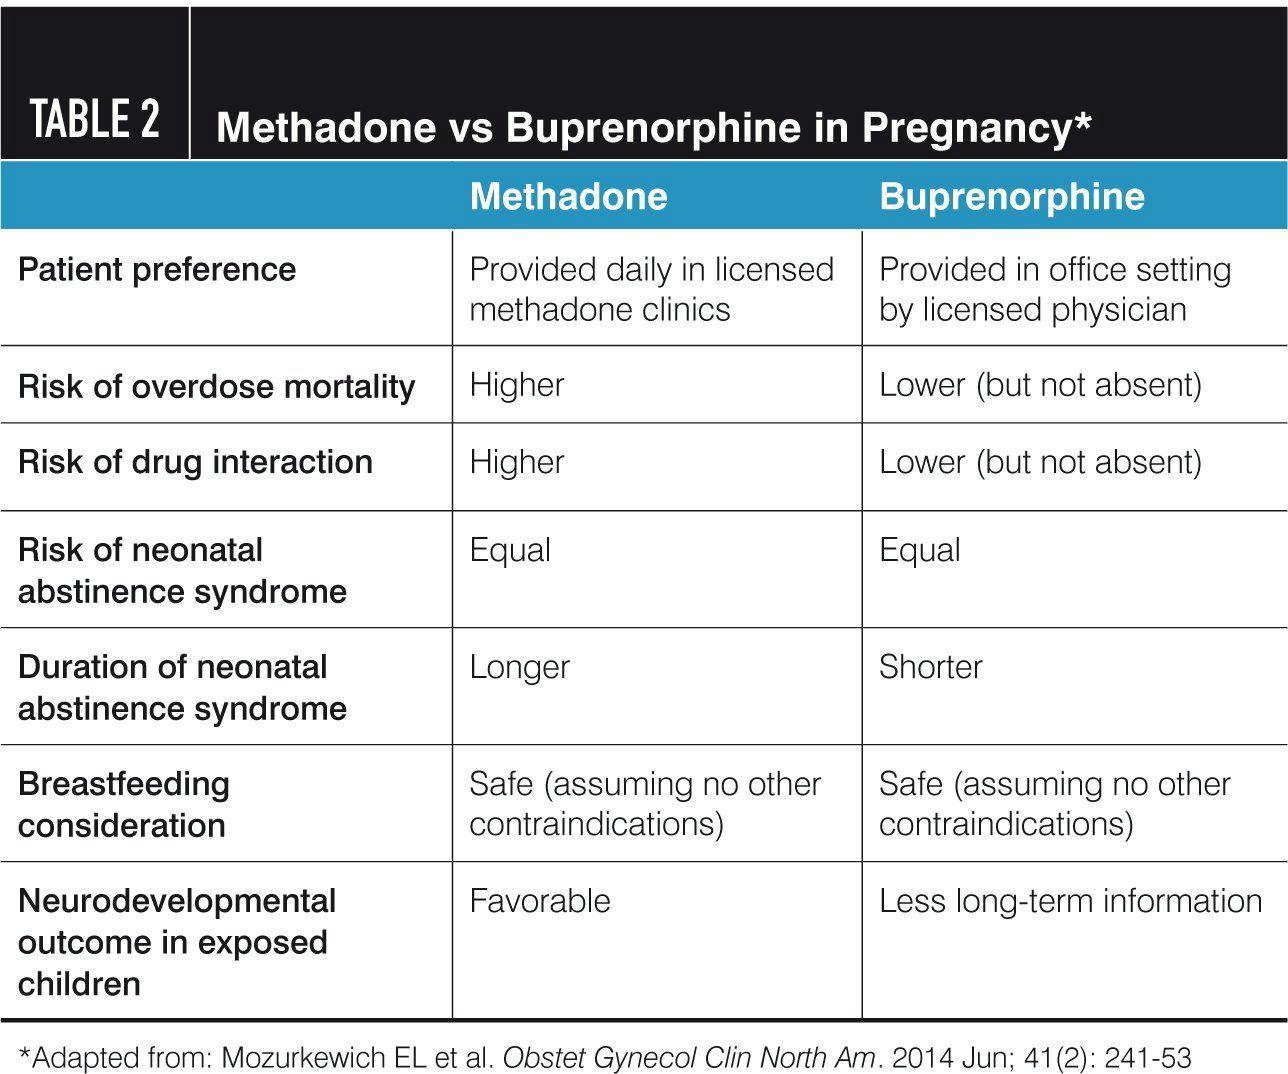 Methadone buprenorphine